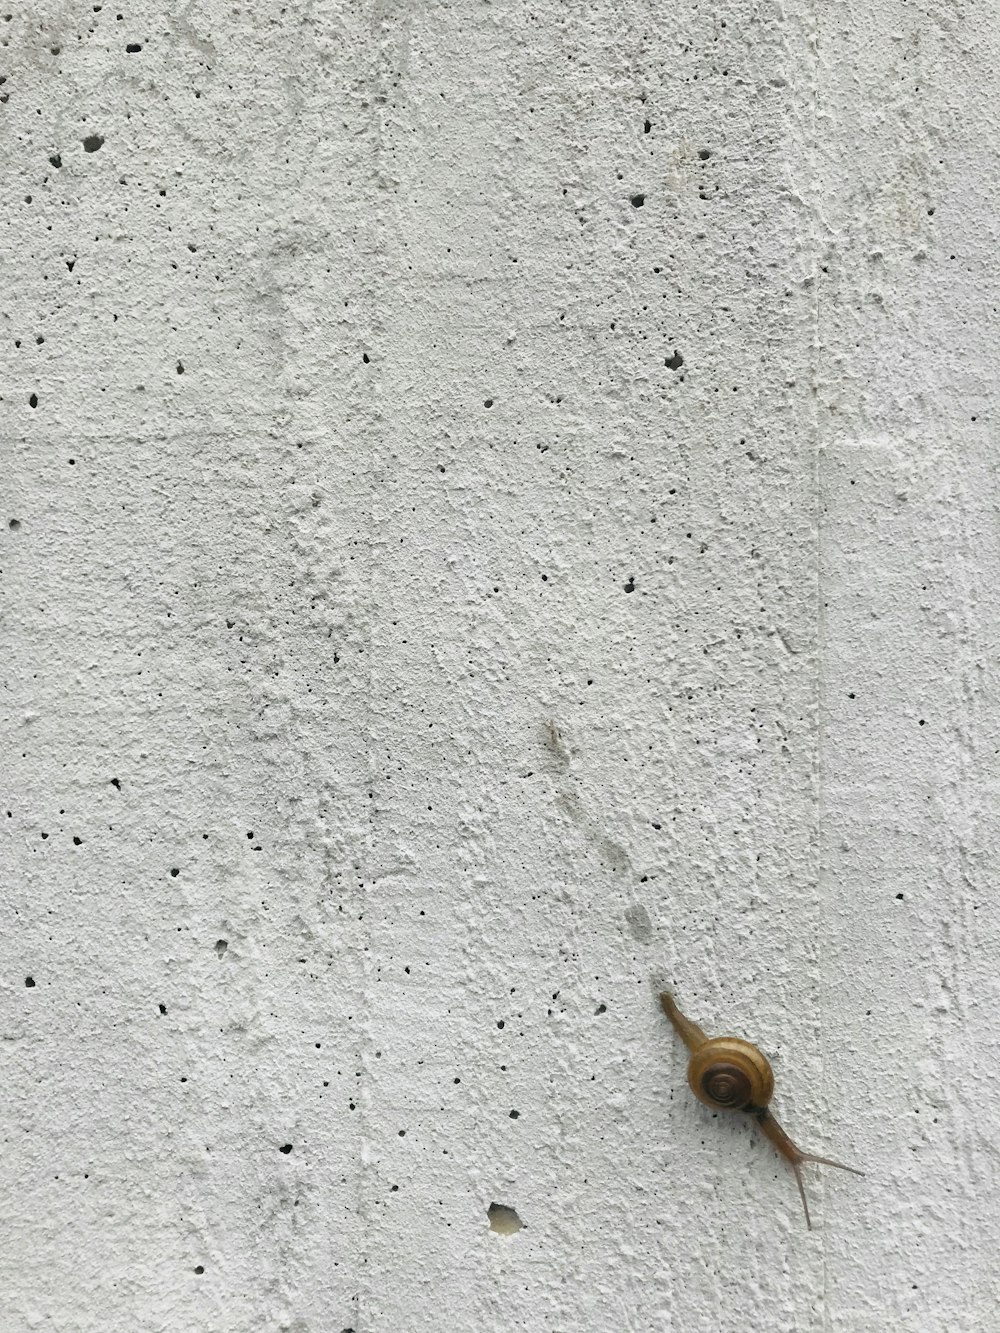 brow snail on gray wall